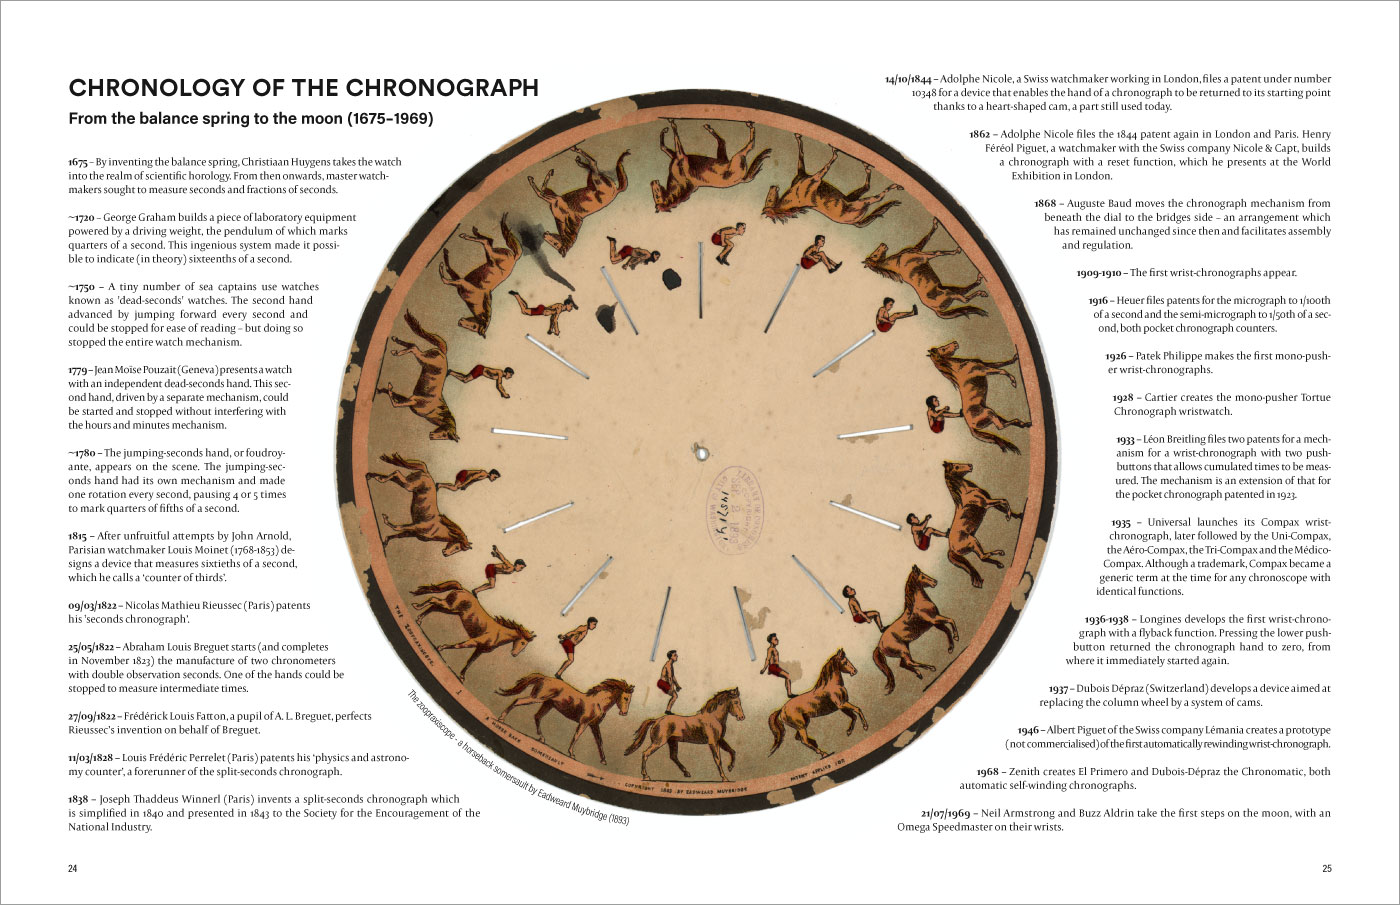 A chronology of the chronograph